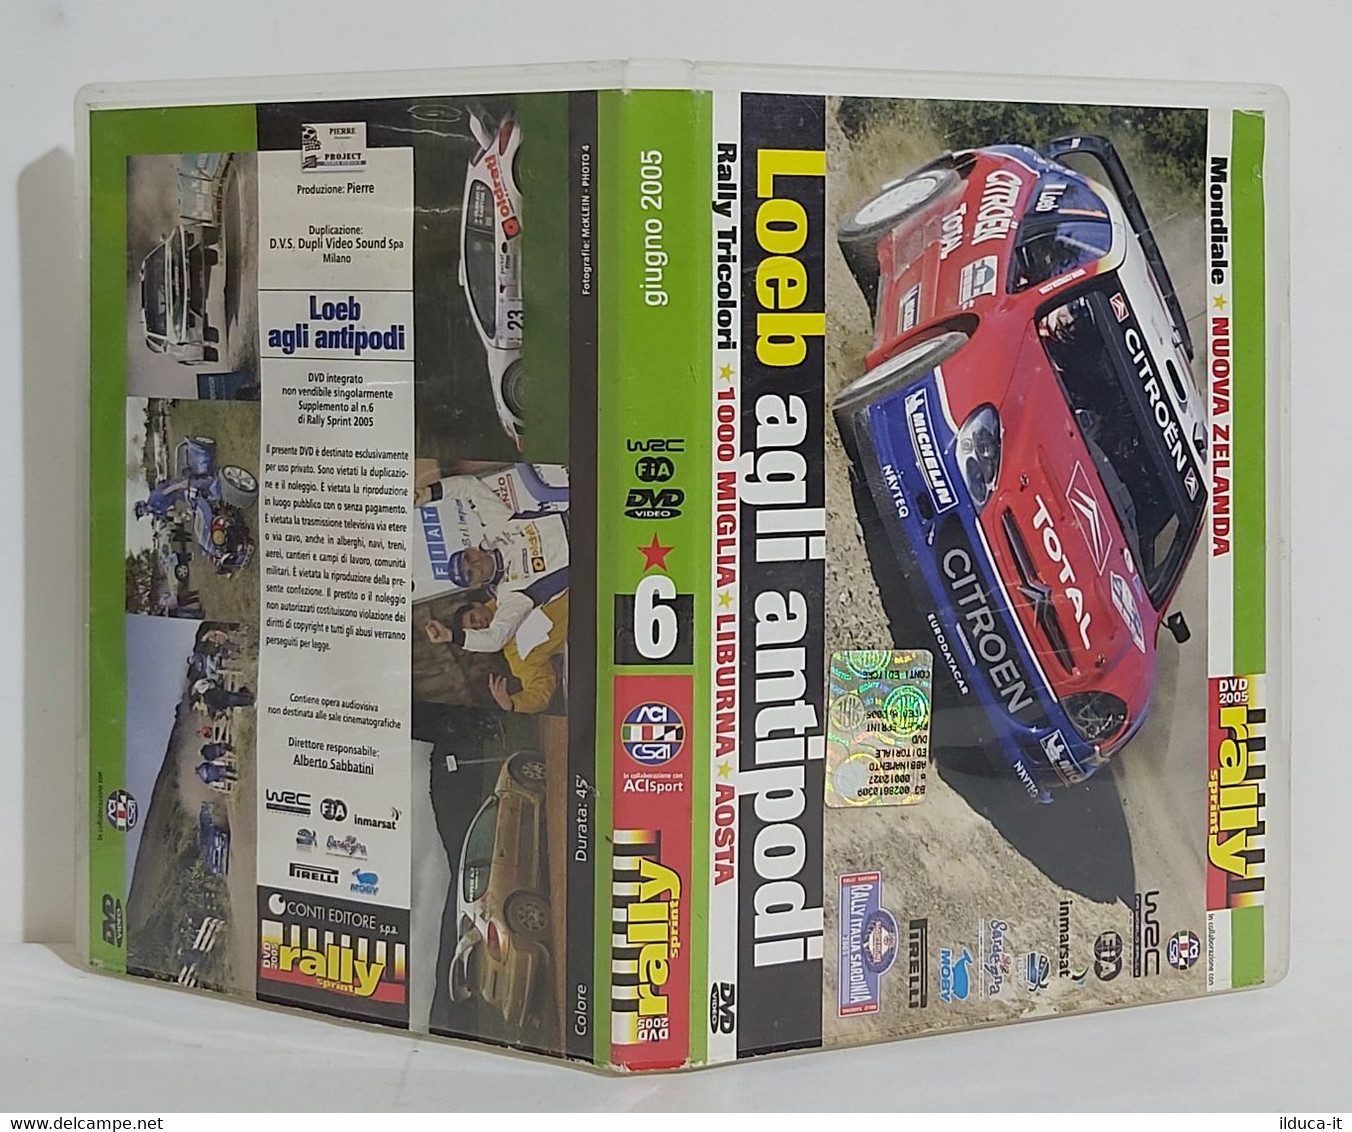 I101816 DVD - Rally Sprint Giugno 2005 N. 6 - Loeb Agli Antipodi - Sports